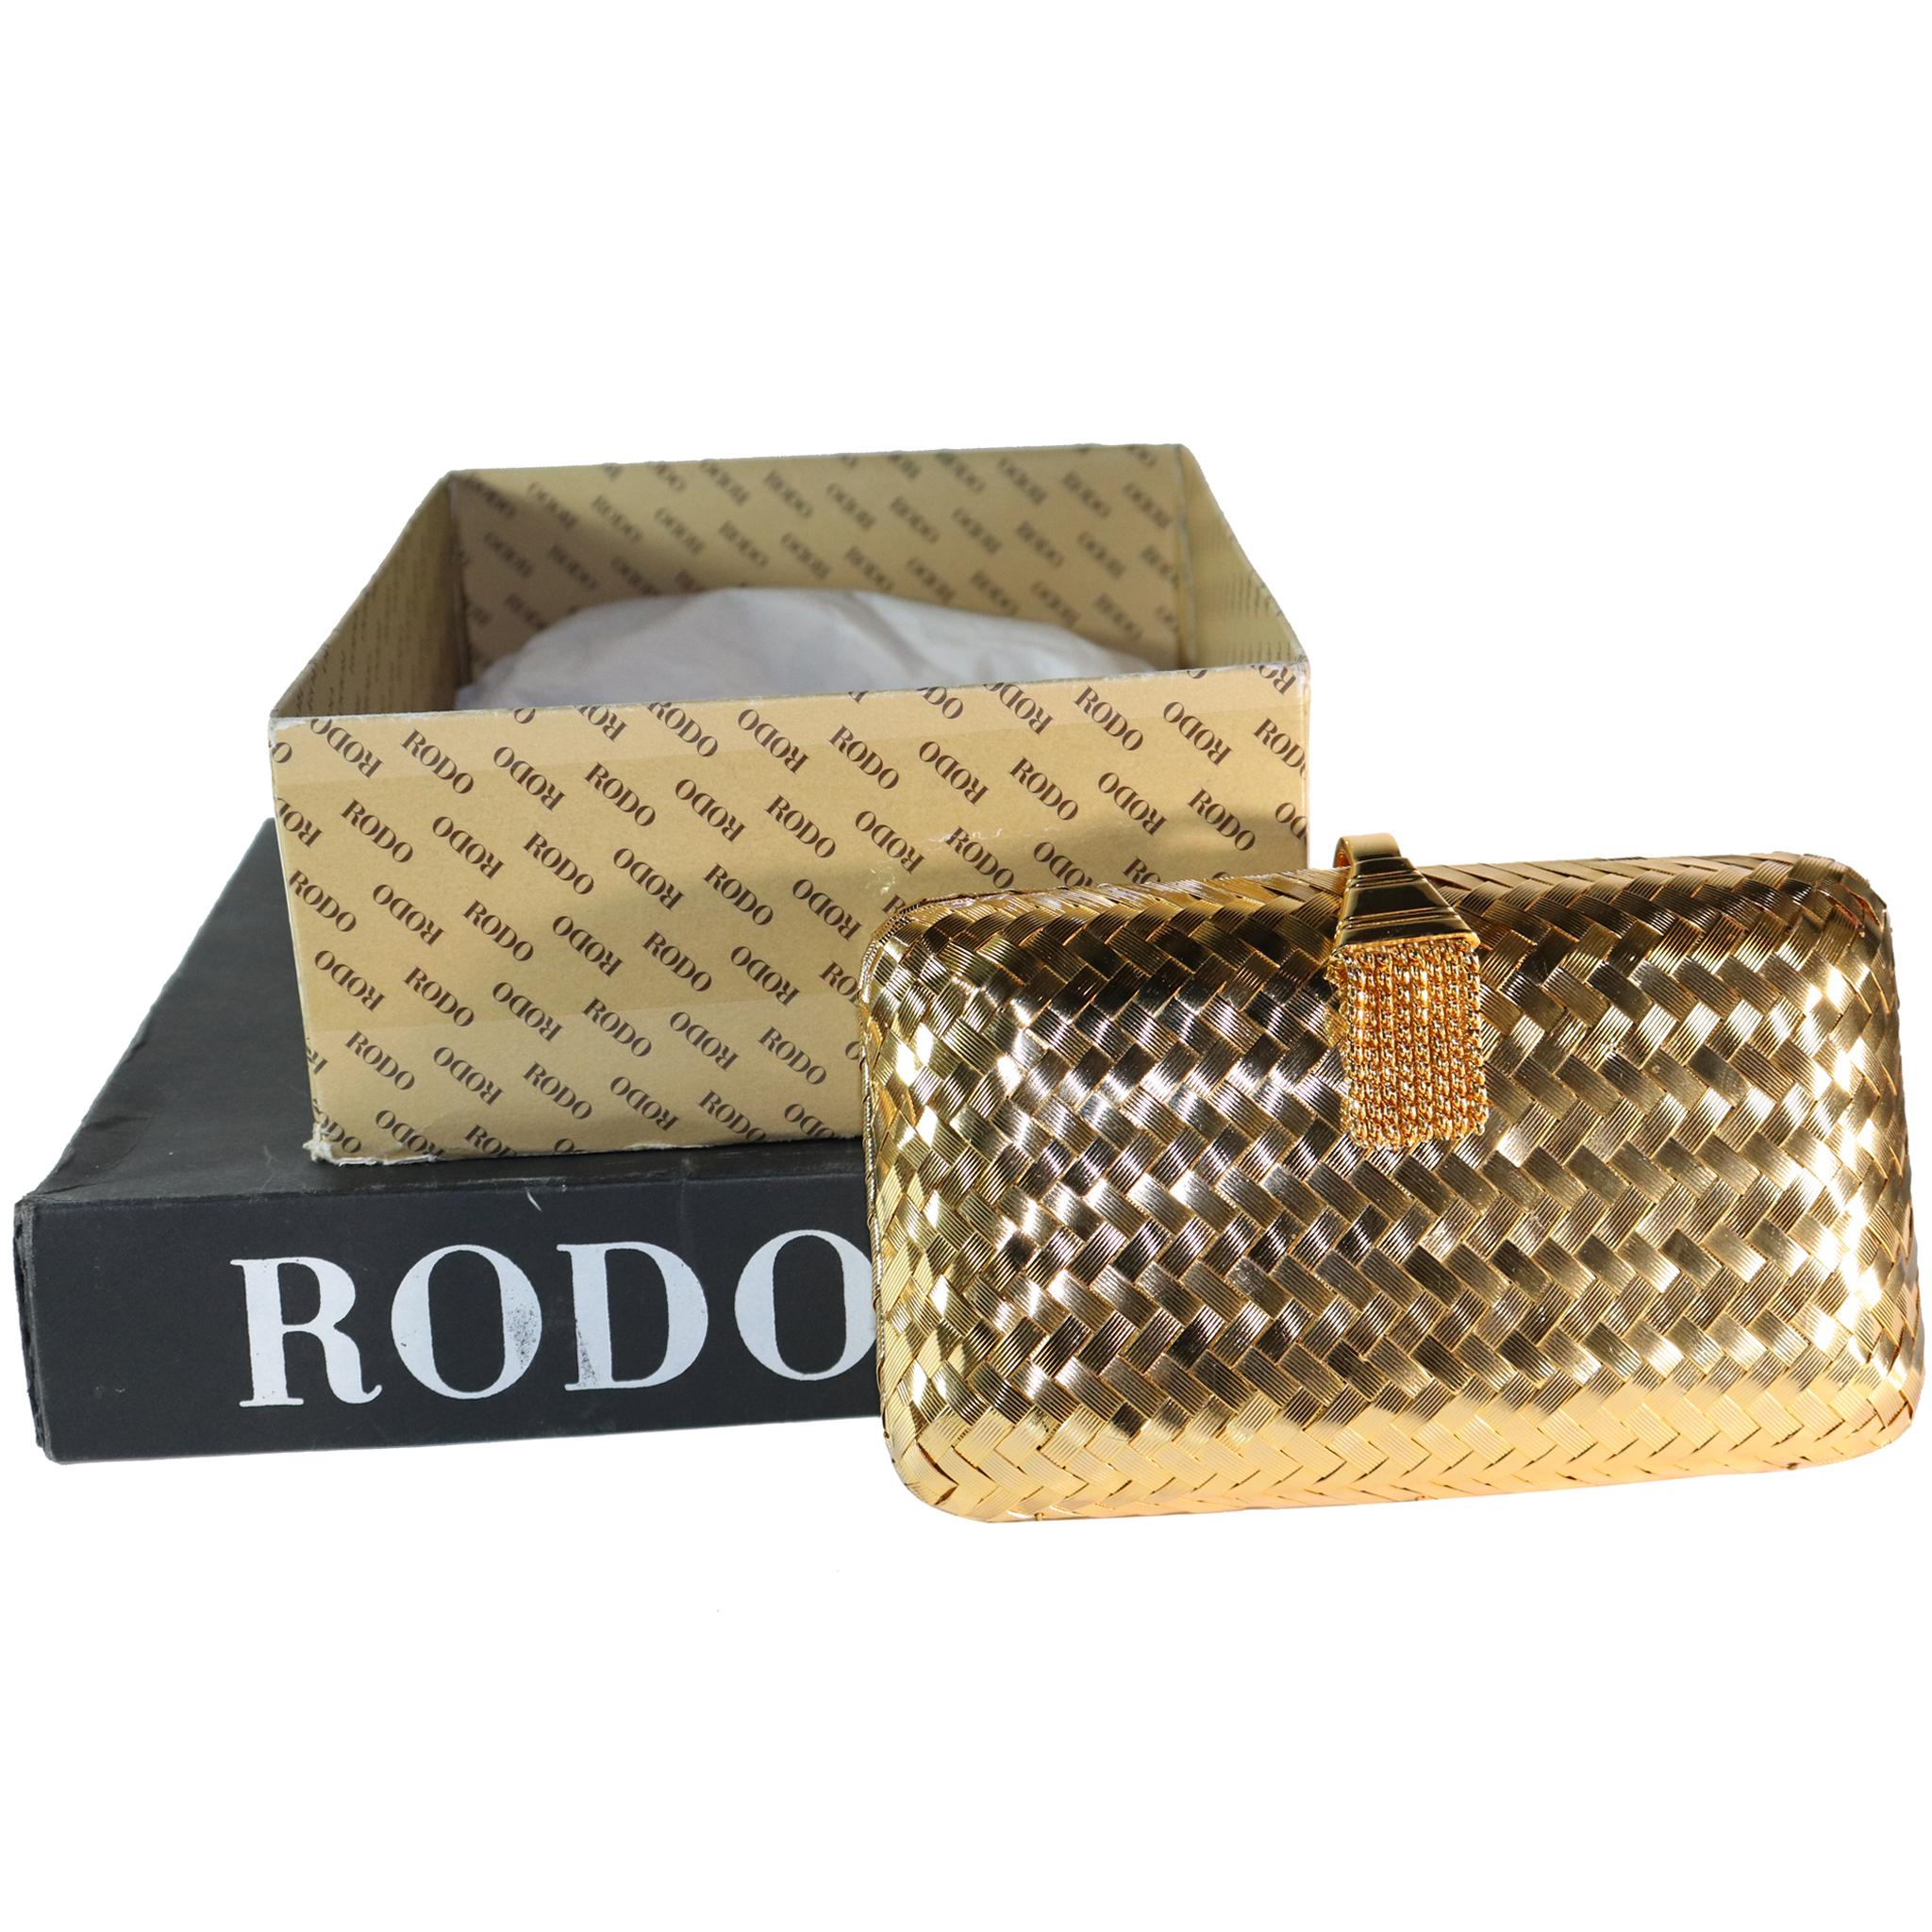 Rodo Golden Minaudière Handbag with Shoulder Chain. In excellent condition,

Measurements:

Height - 5.2 Inches 
Width - 8.5 Inches 
Height with Chain - 25.3 Inches '
